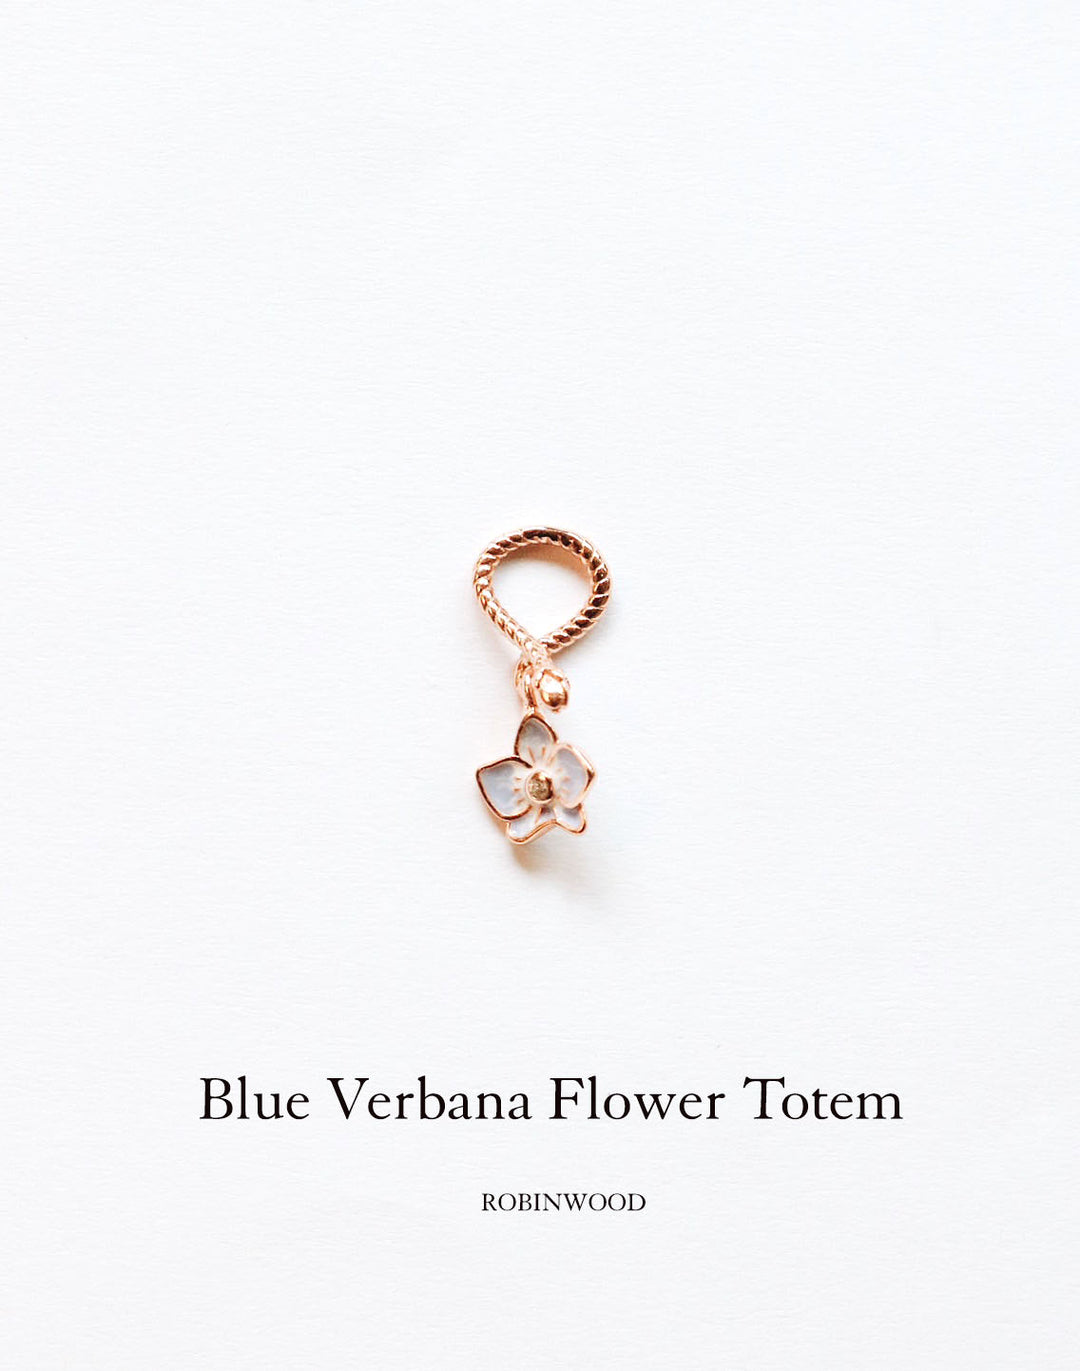 Flower Totem " Blue Verbana Totem ", Robinwood Charm